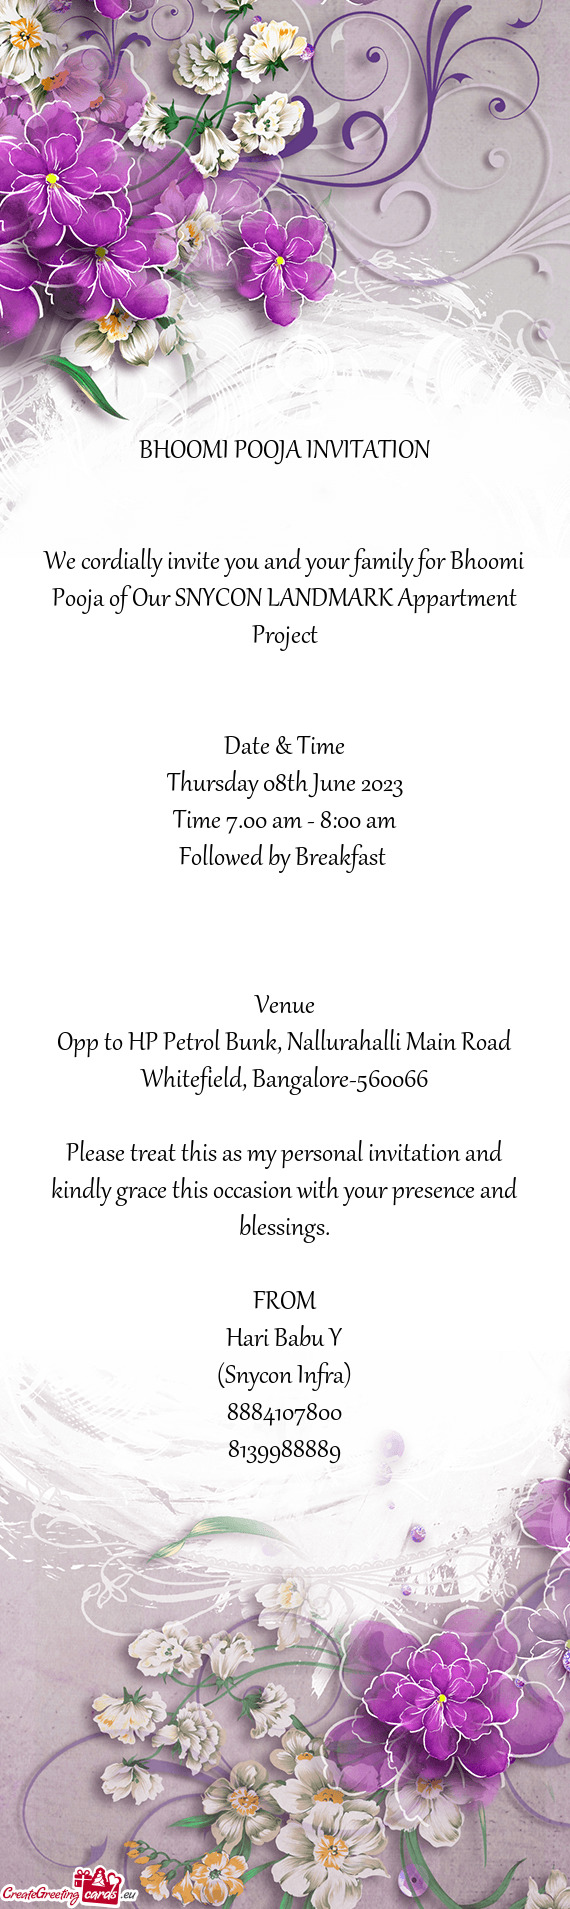 Opp to HP Petrol Bunk, Nallurahalli Main Road